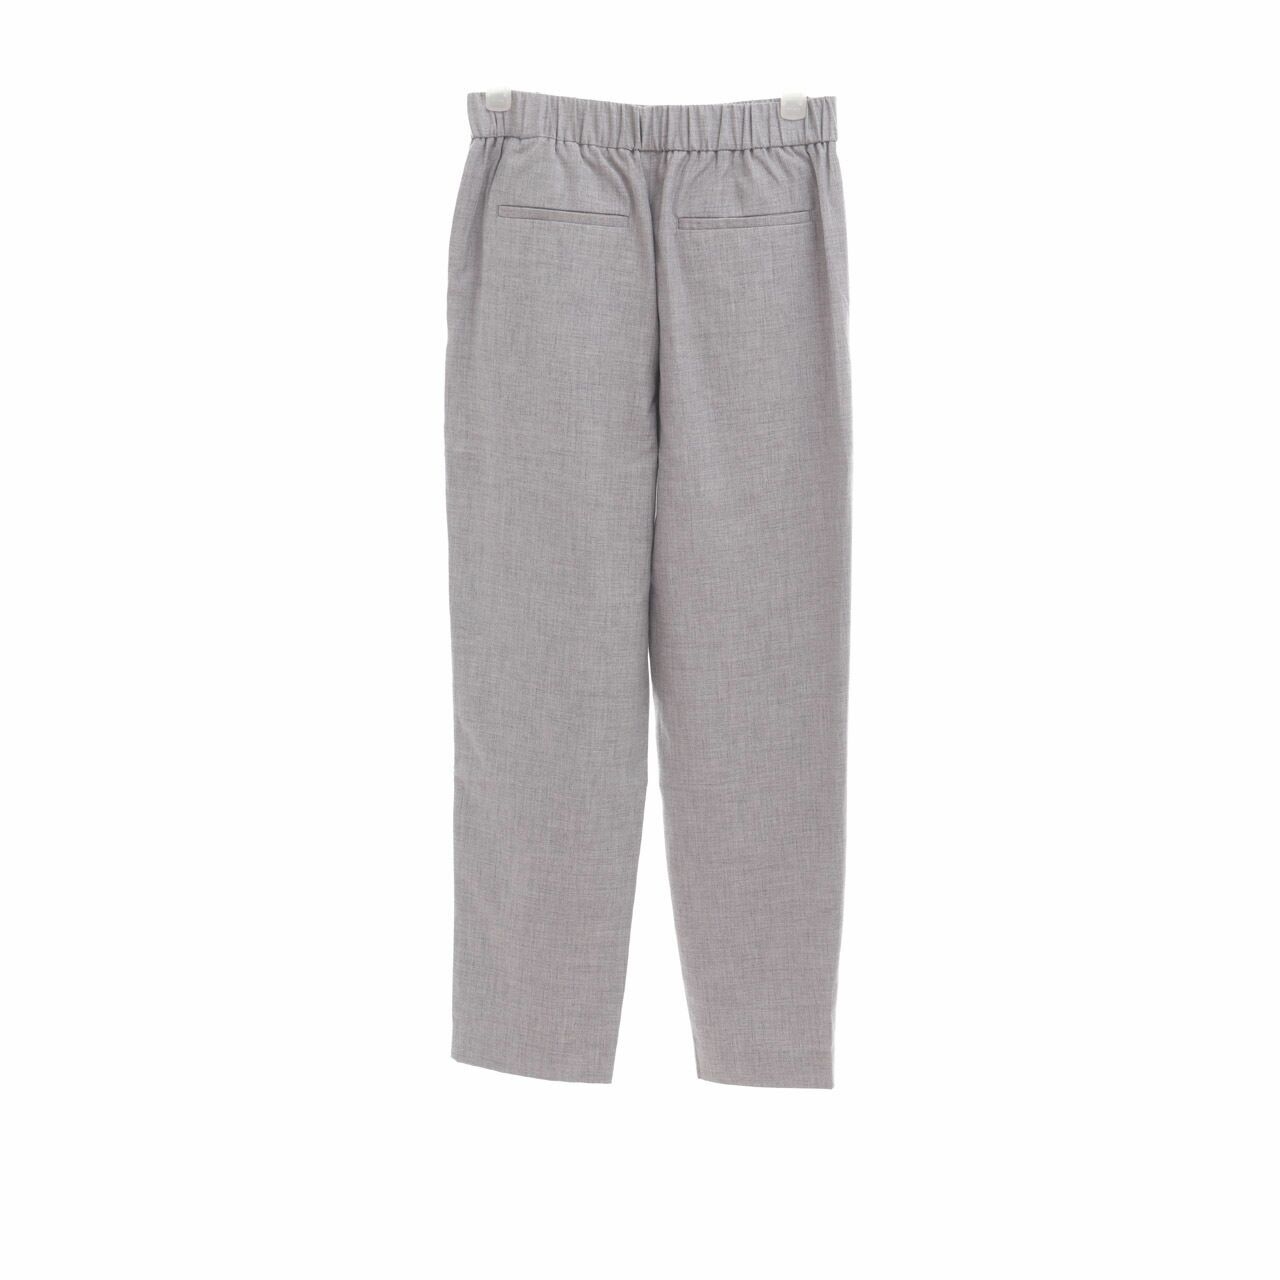 B+AB Grey Long Pants